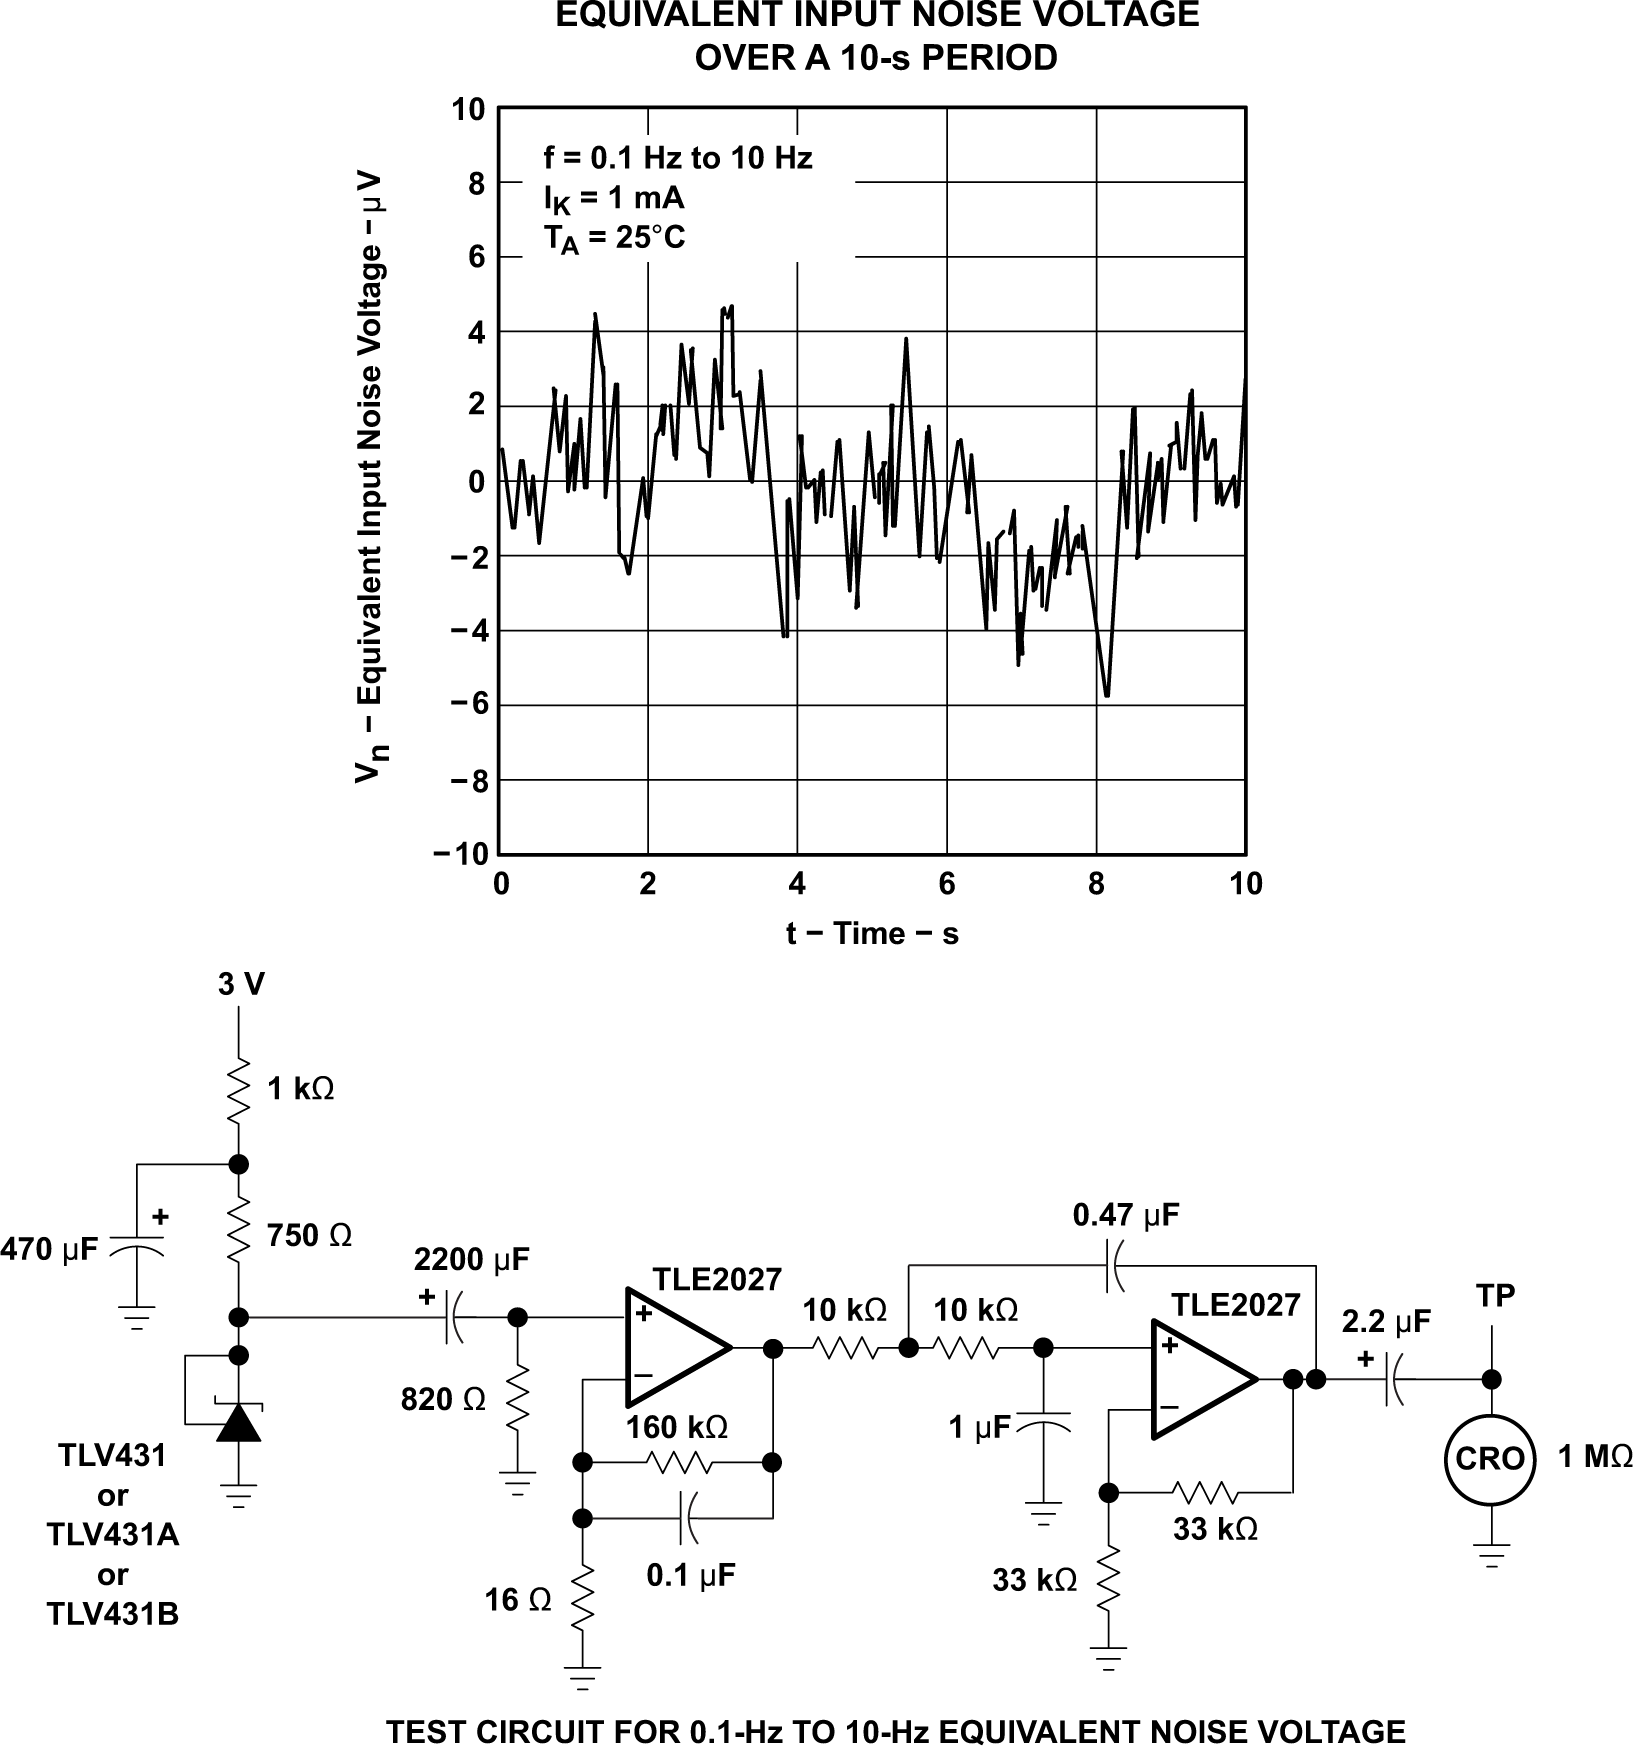 TLV431 TLV431A TLV431B Equivalent Noise Voltage
                        over a 10S Period